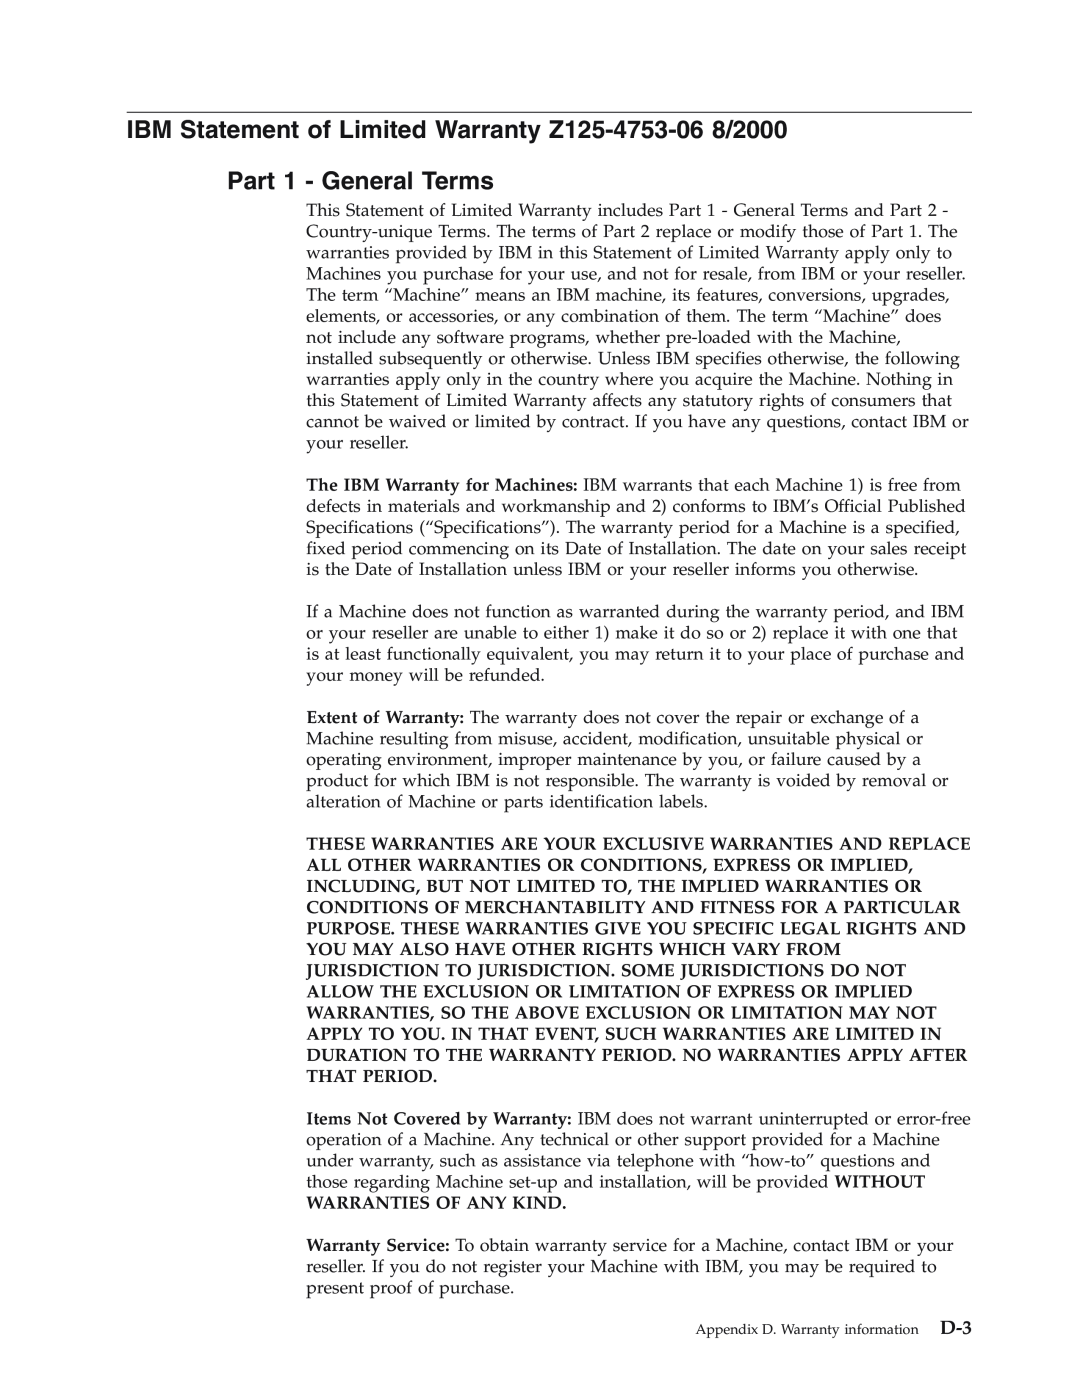 IBM Partner Pavilion iLV300 manual IBM Statement of Limited Warranty Z125-4753-06 8/2000, Part 1 - General Terms 